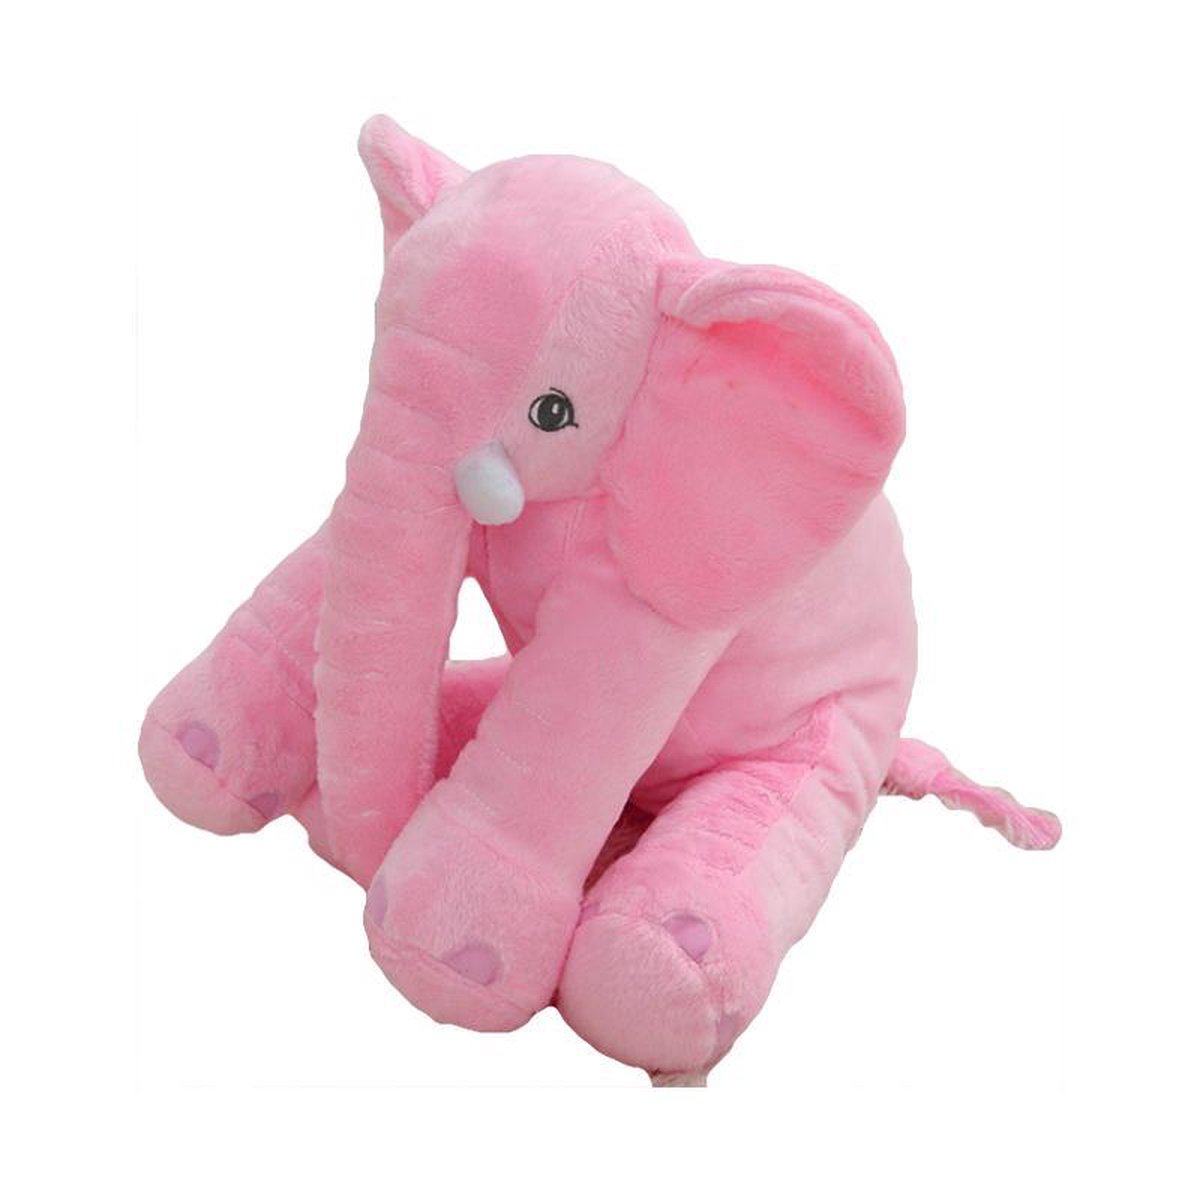 Schatting leiderschap lood DW4Trading® Knuffel olifant roze 40 cm | bol.com